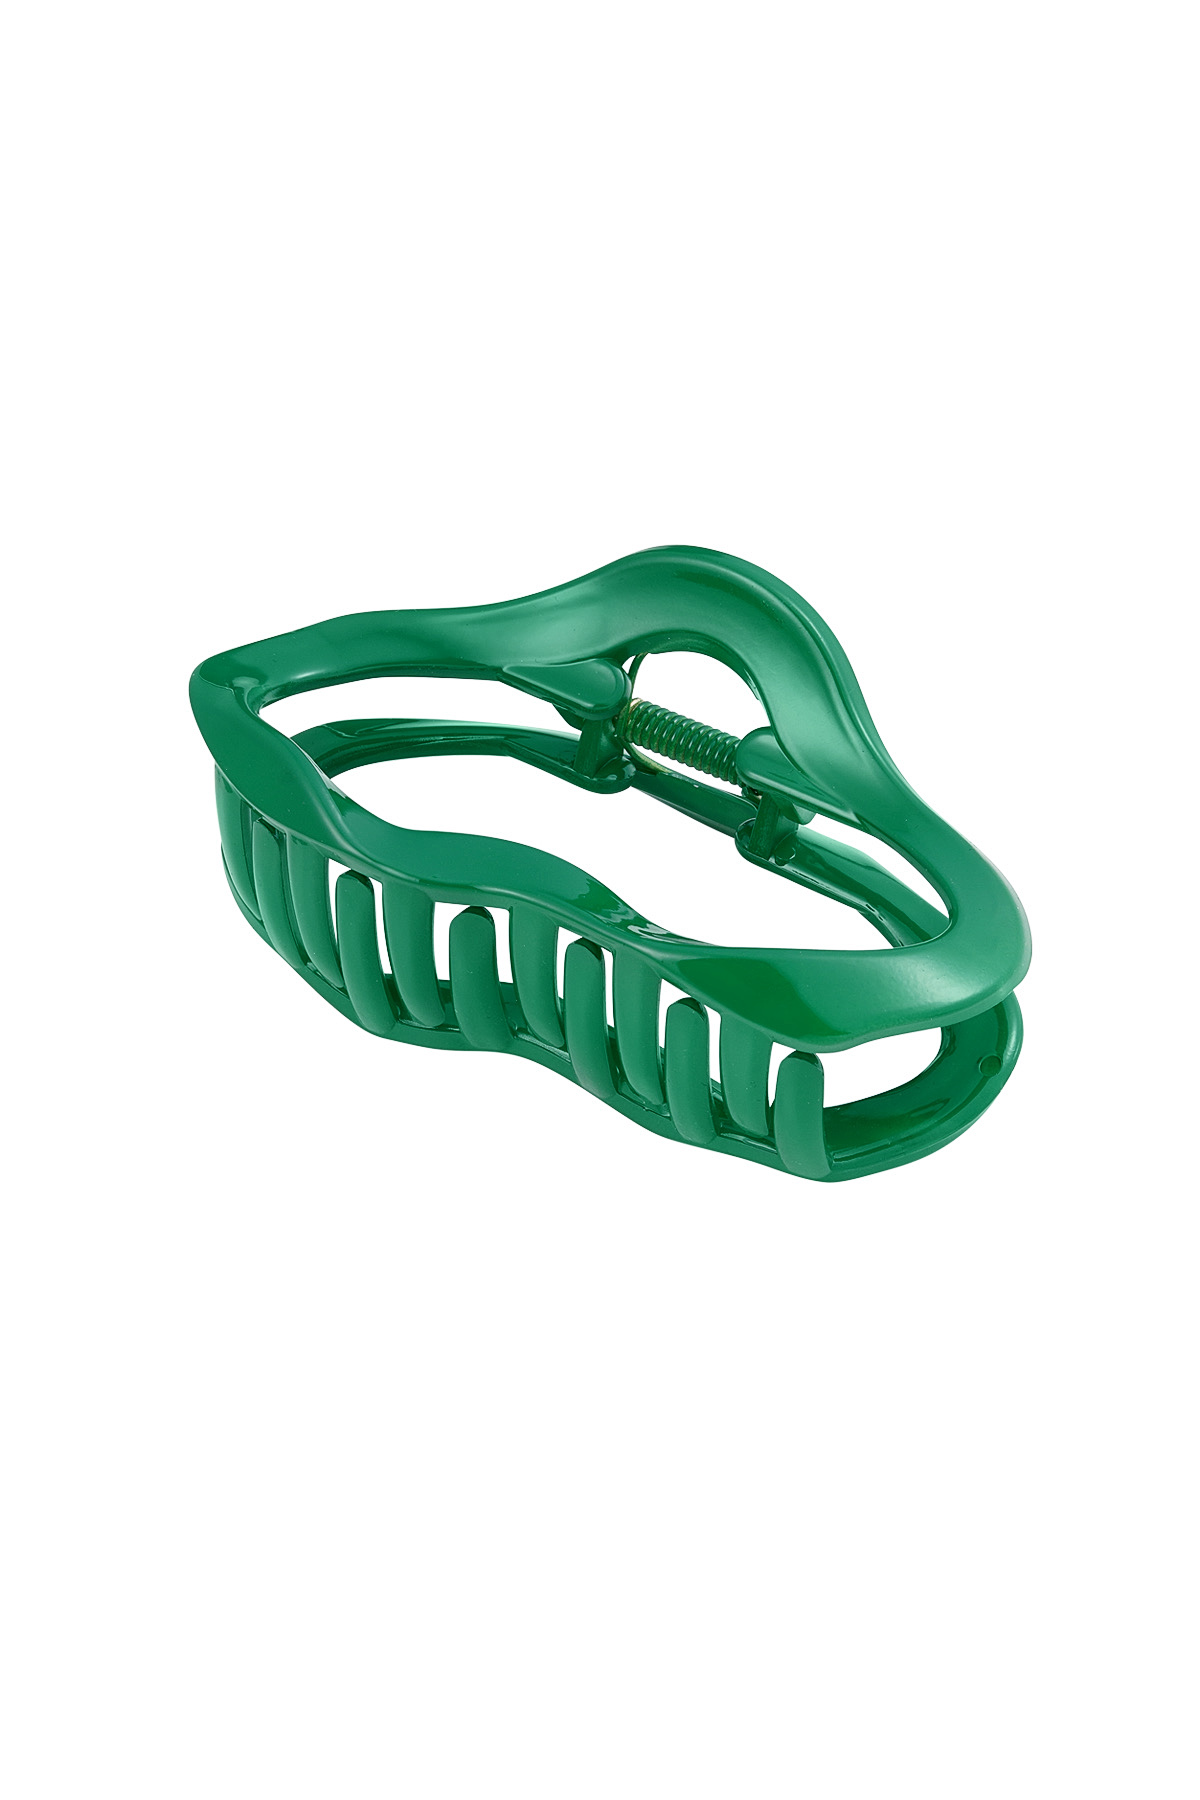 Hair clip aesthetic - green h5 